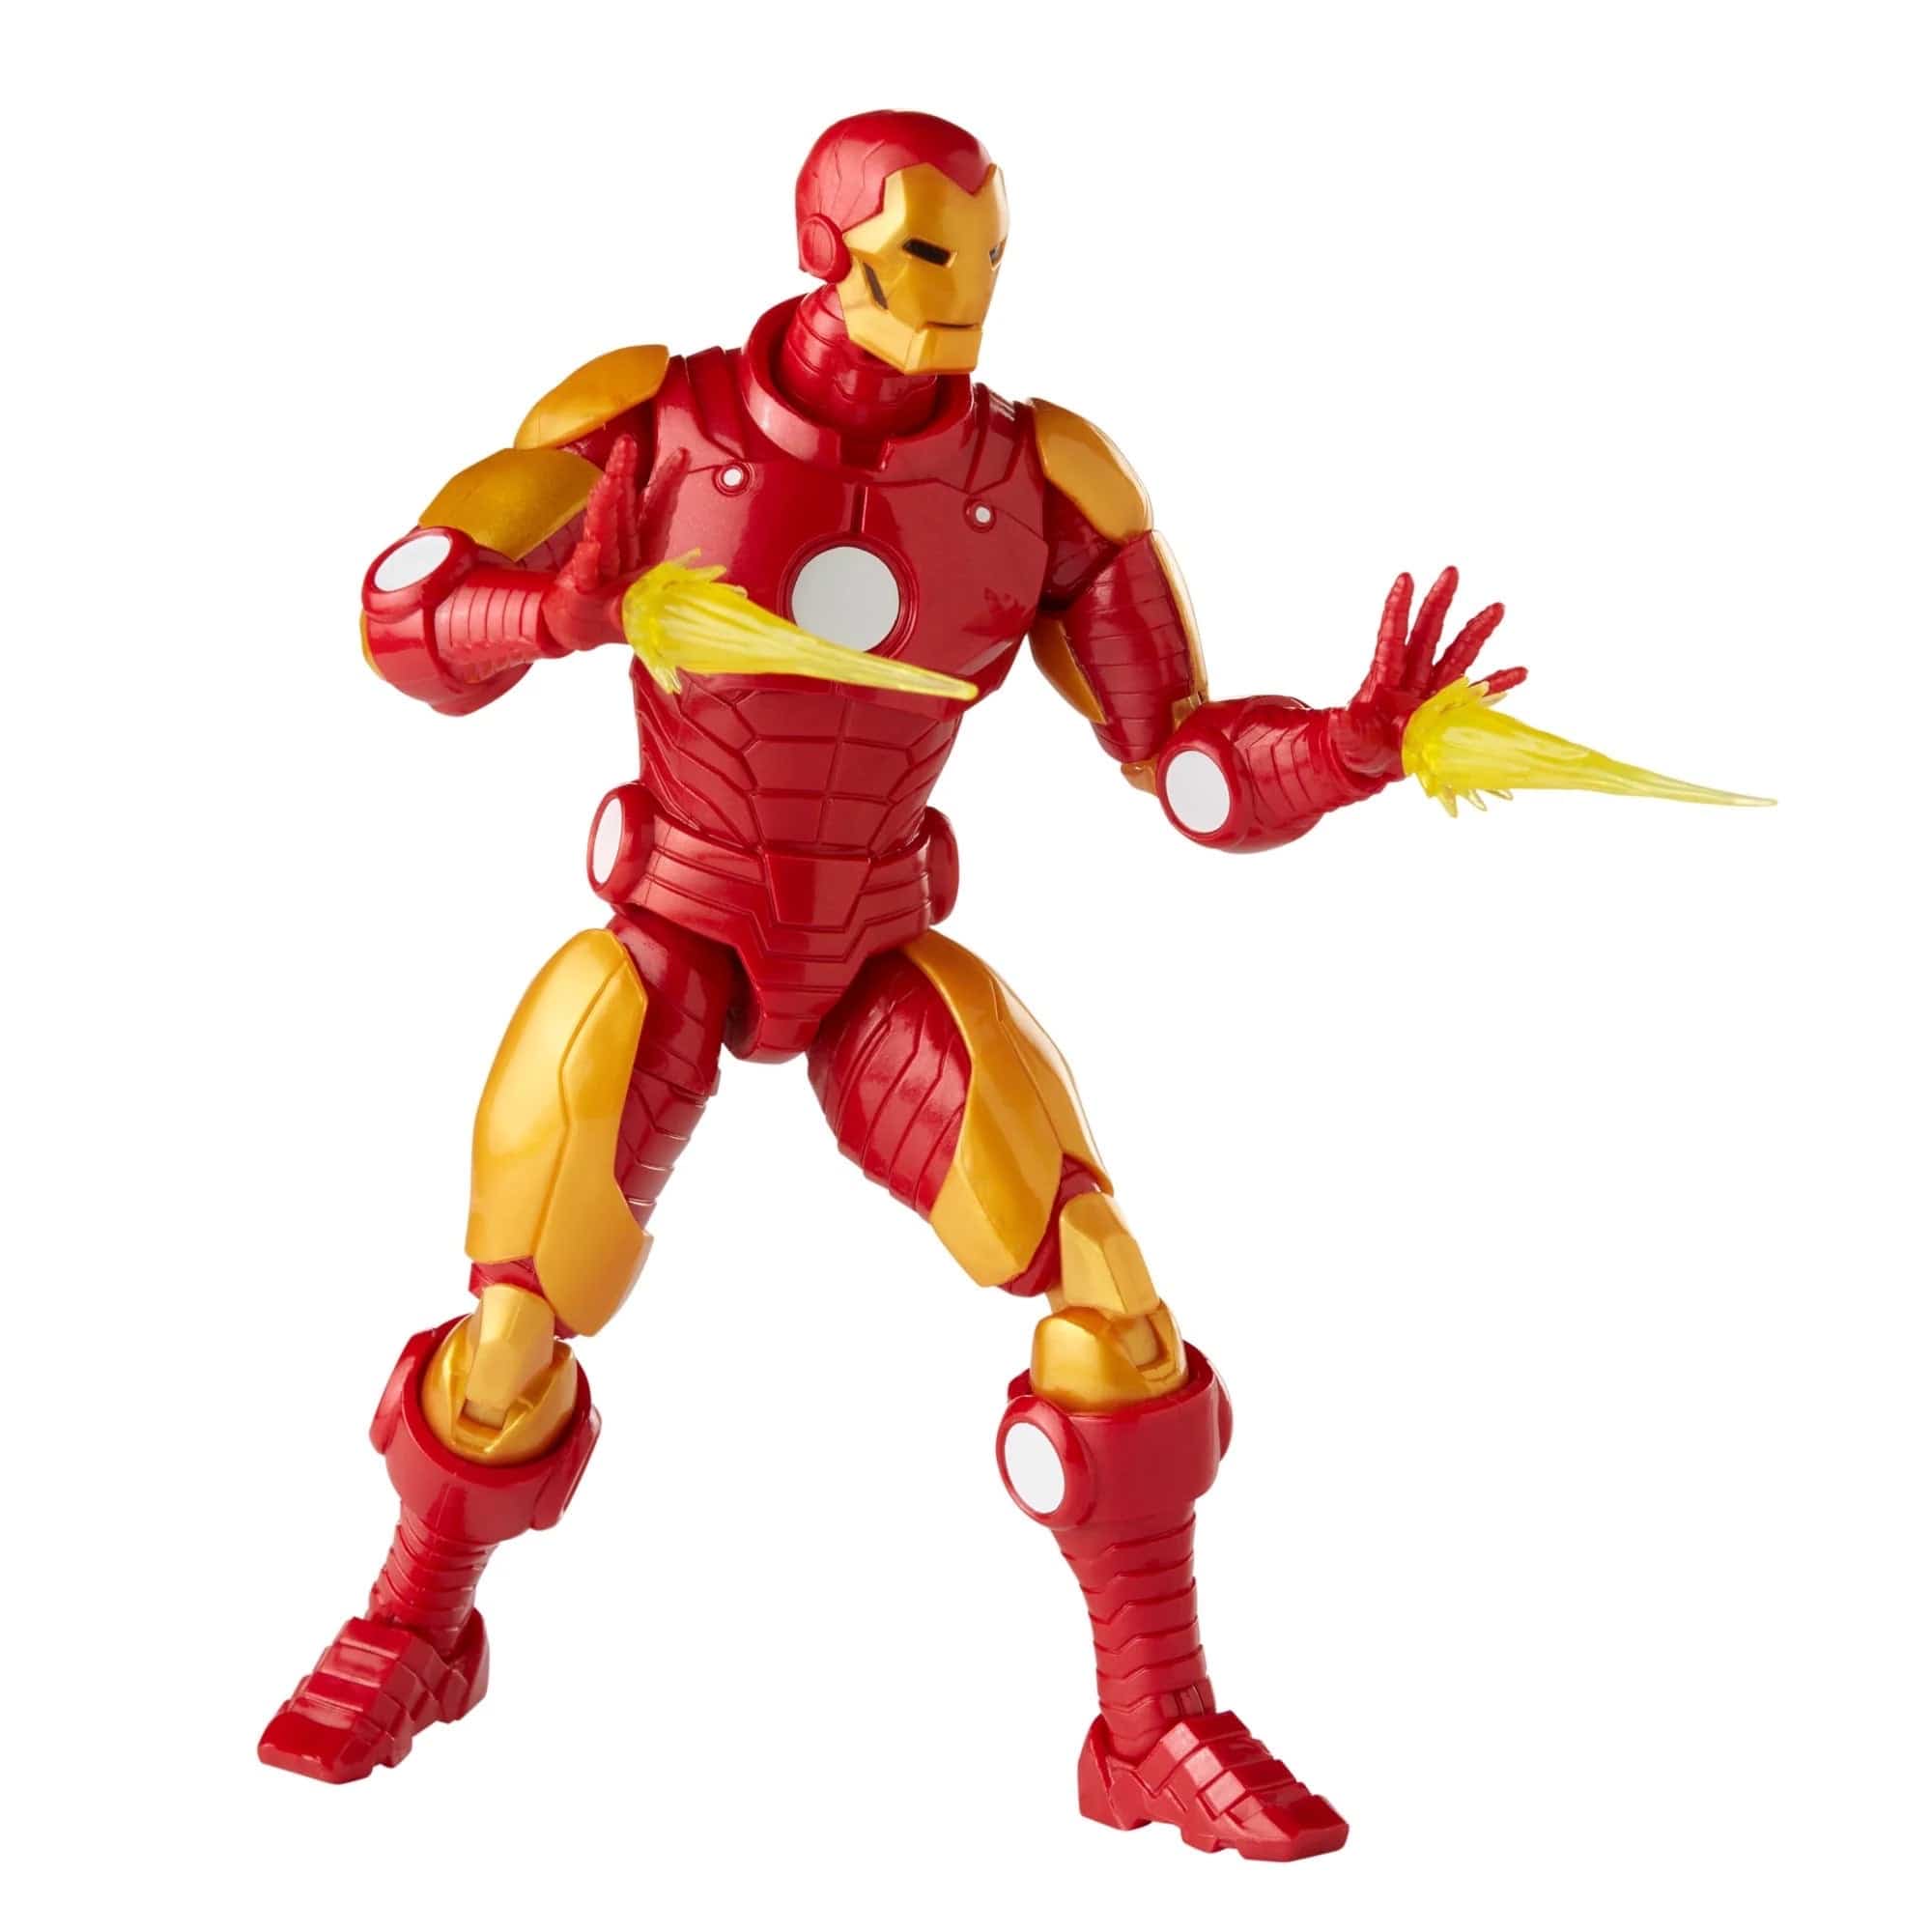 Hasbro Marvel Legends Series Iron Man Model 70 Action Figure